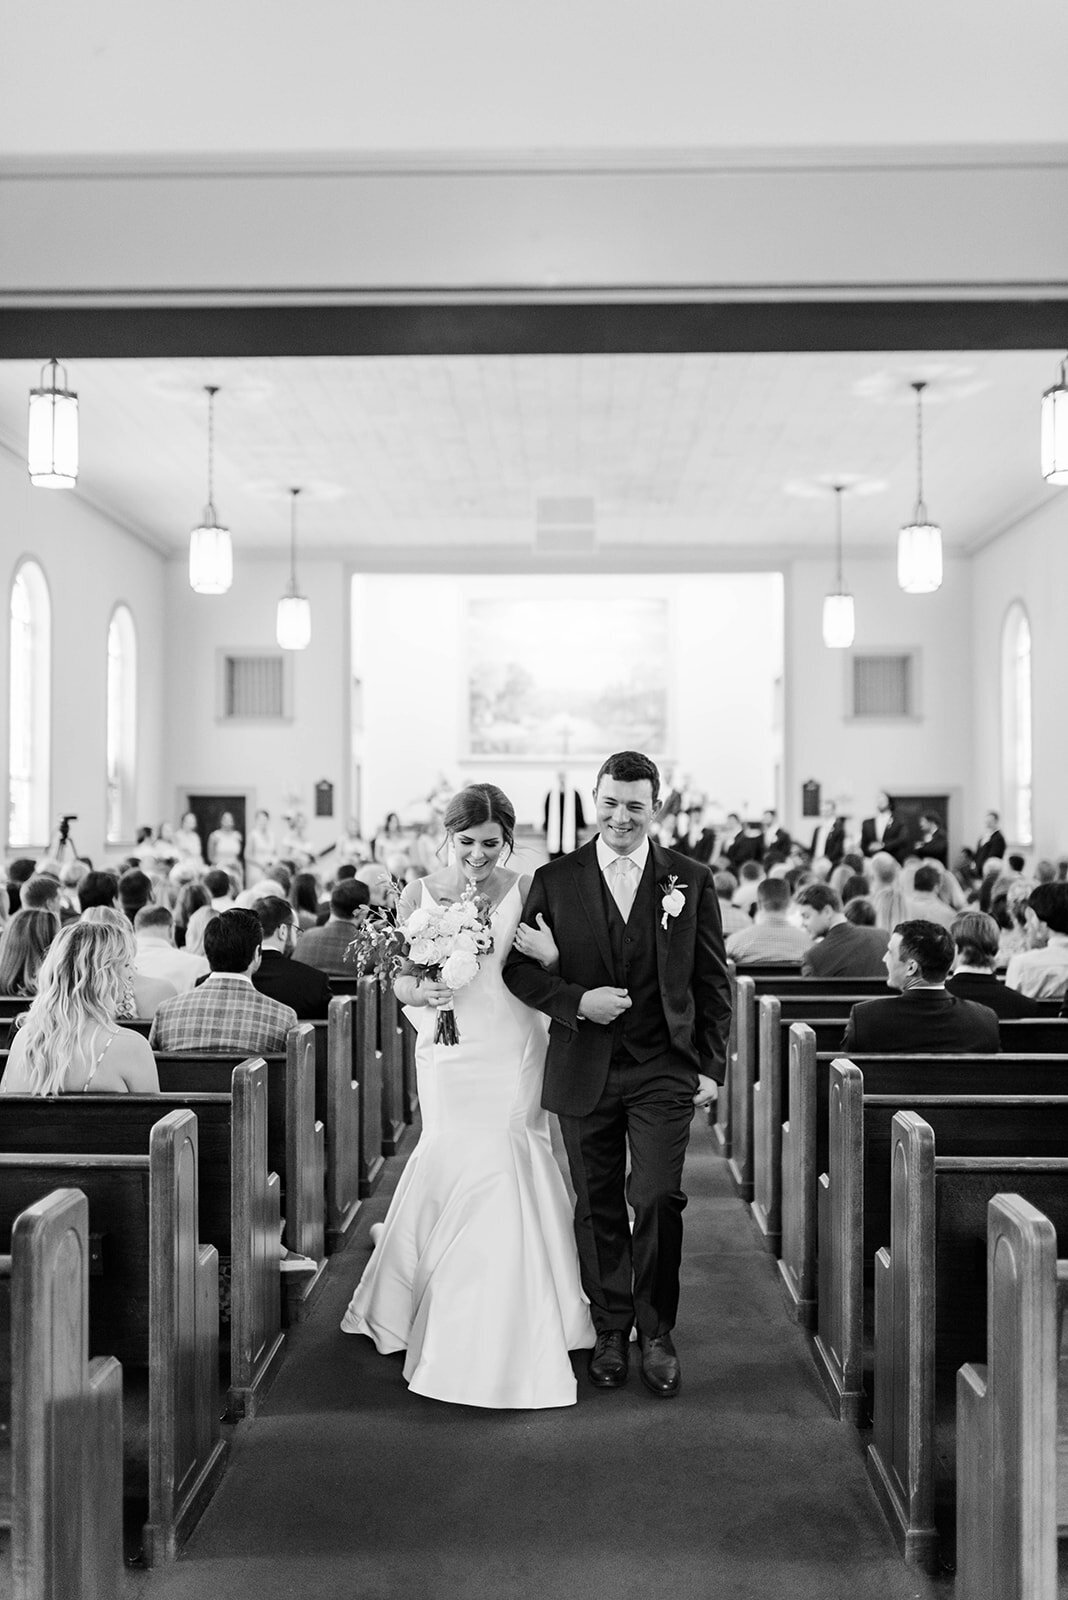 Kayley + Austin Wedding - Photography by Gerri Anna-504